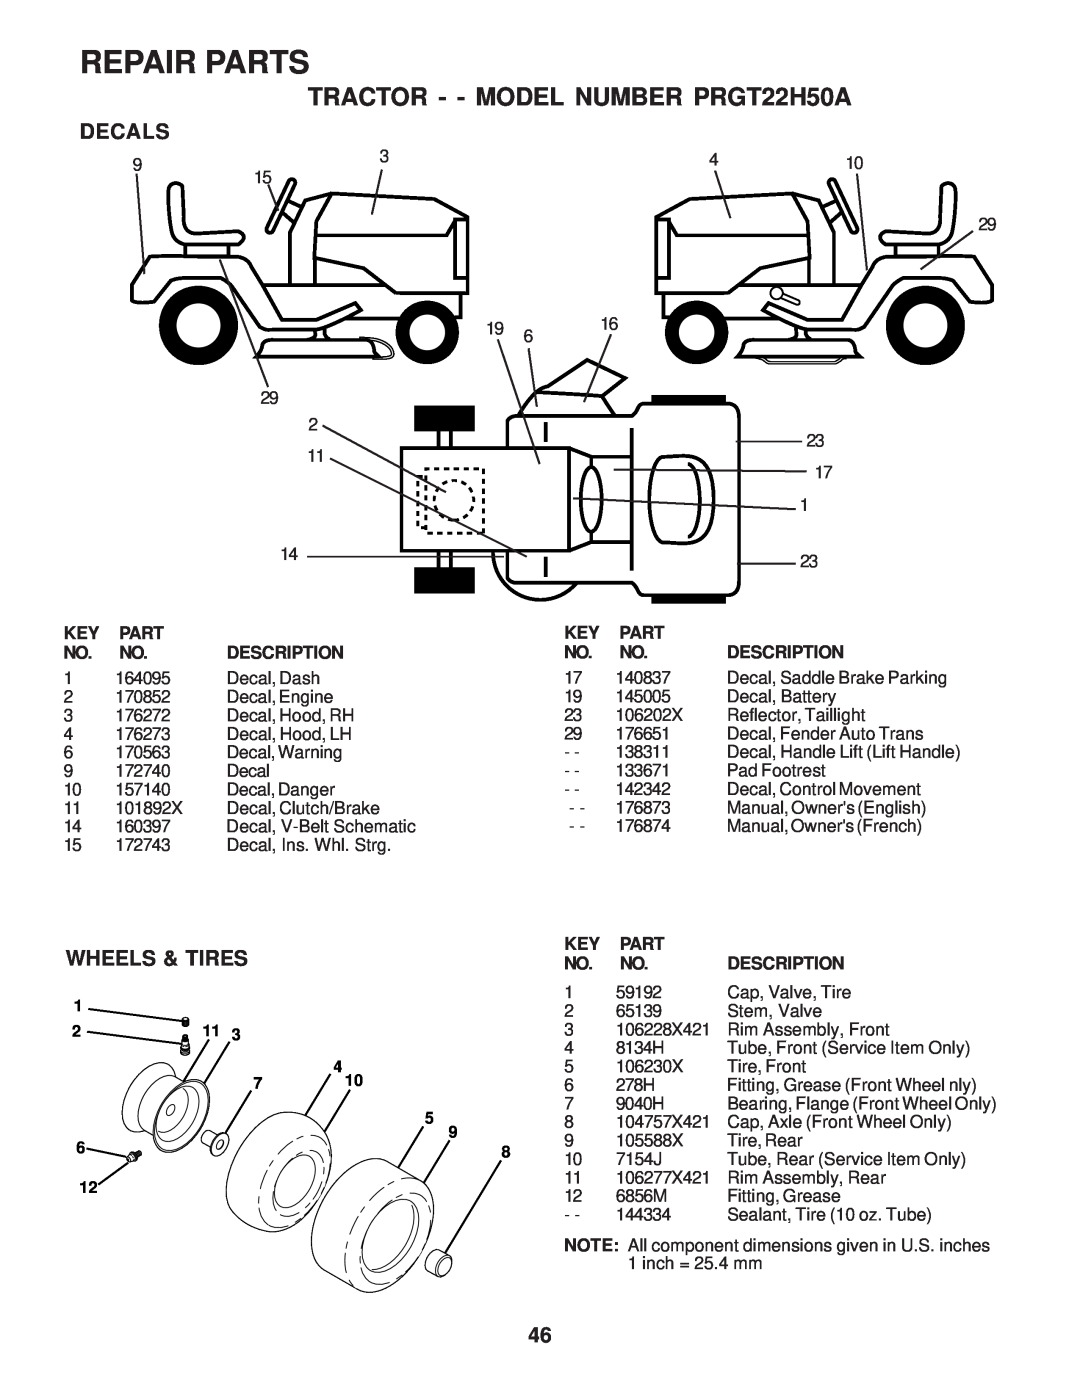 Poulan 176873 owner manual Repair Parts, TRACTOR - - MODEL NUMBER PRGT22H50A, Decals, Wheels & Tires, Description 